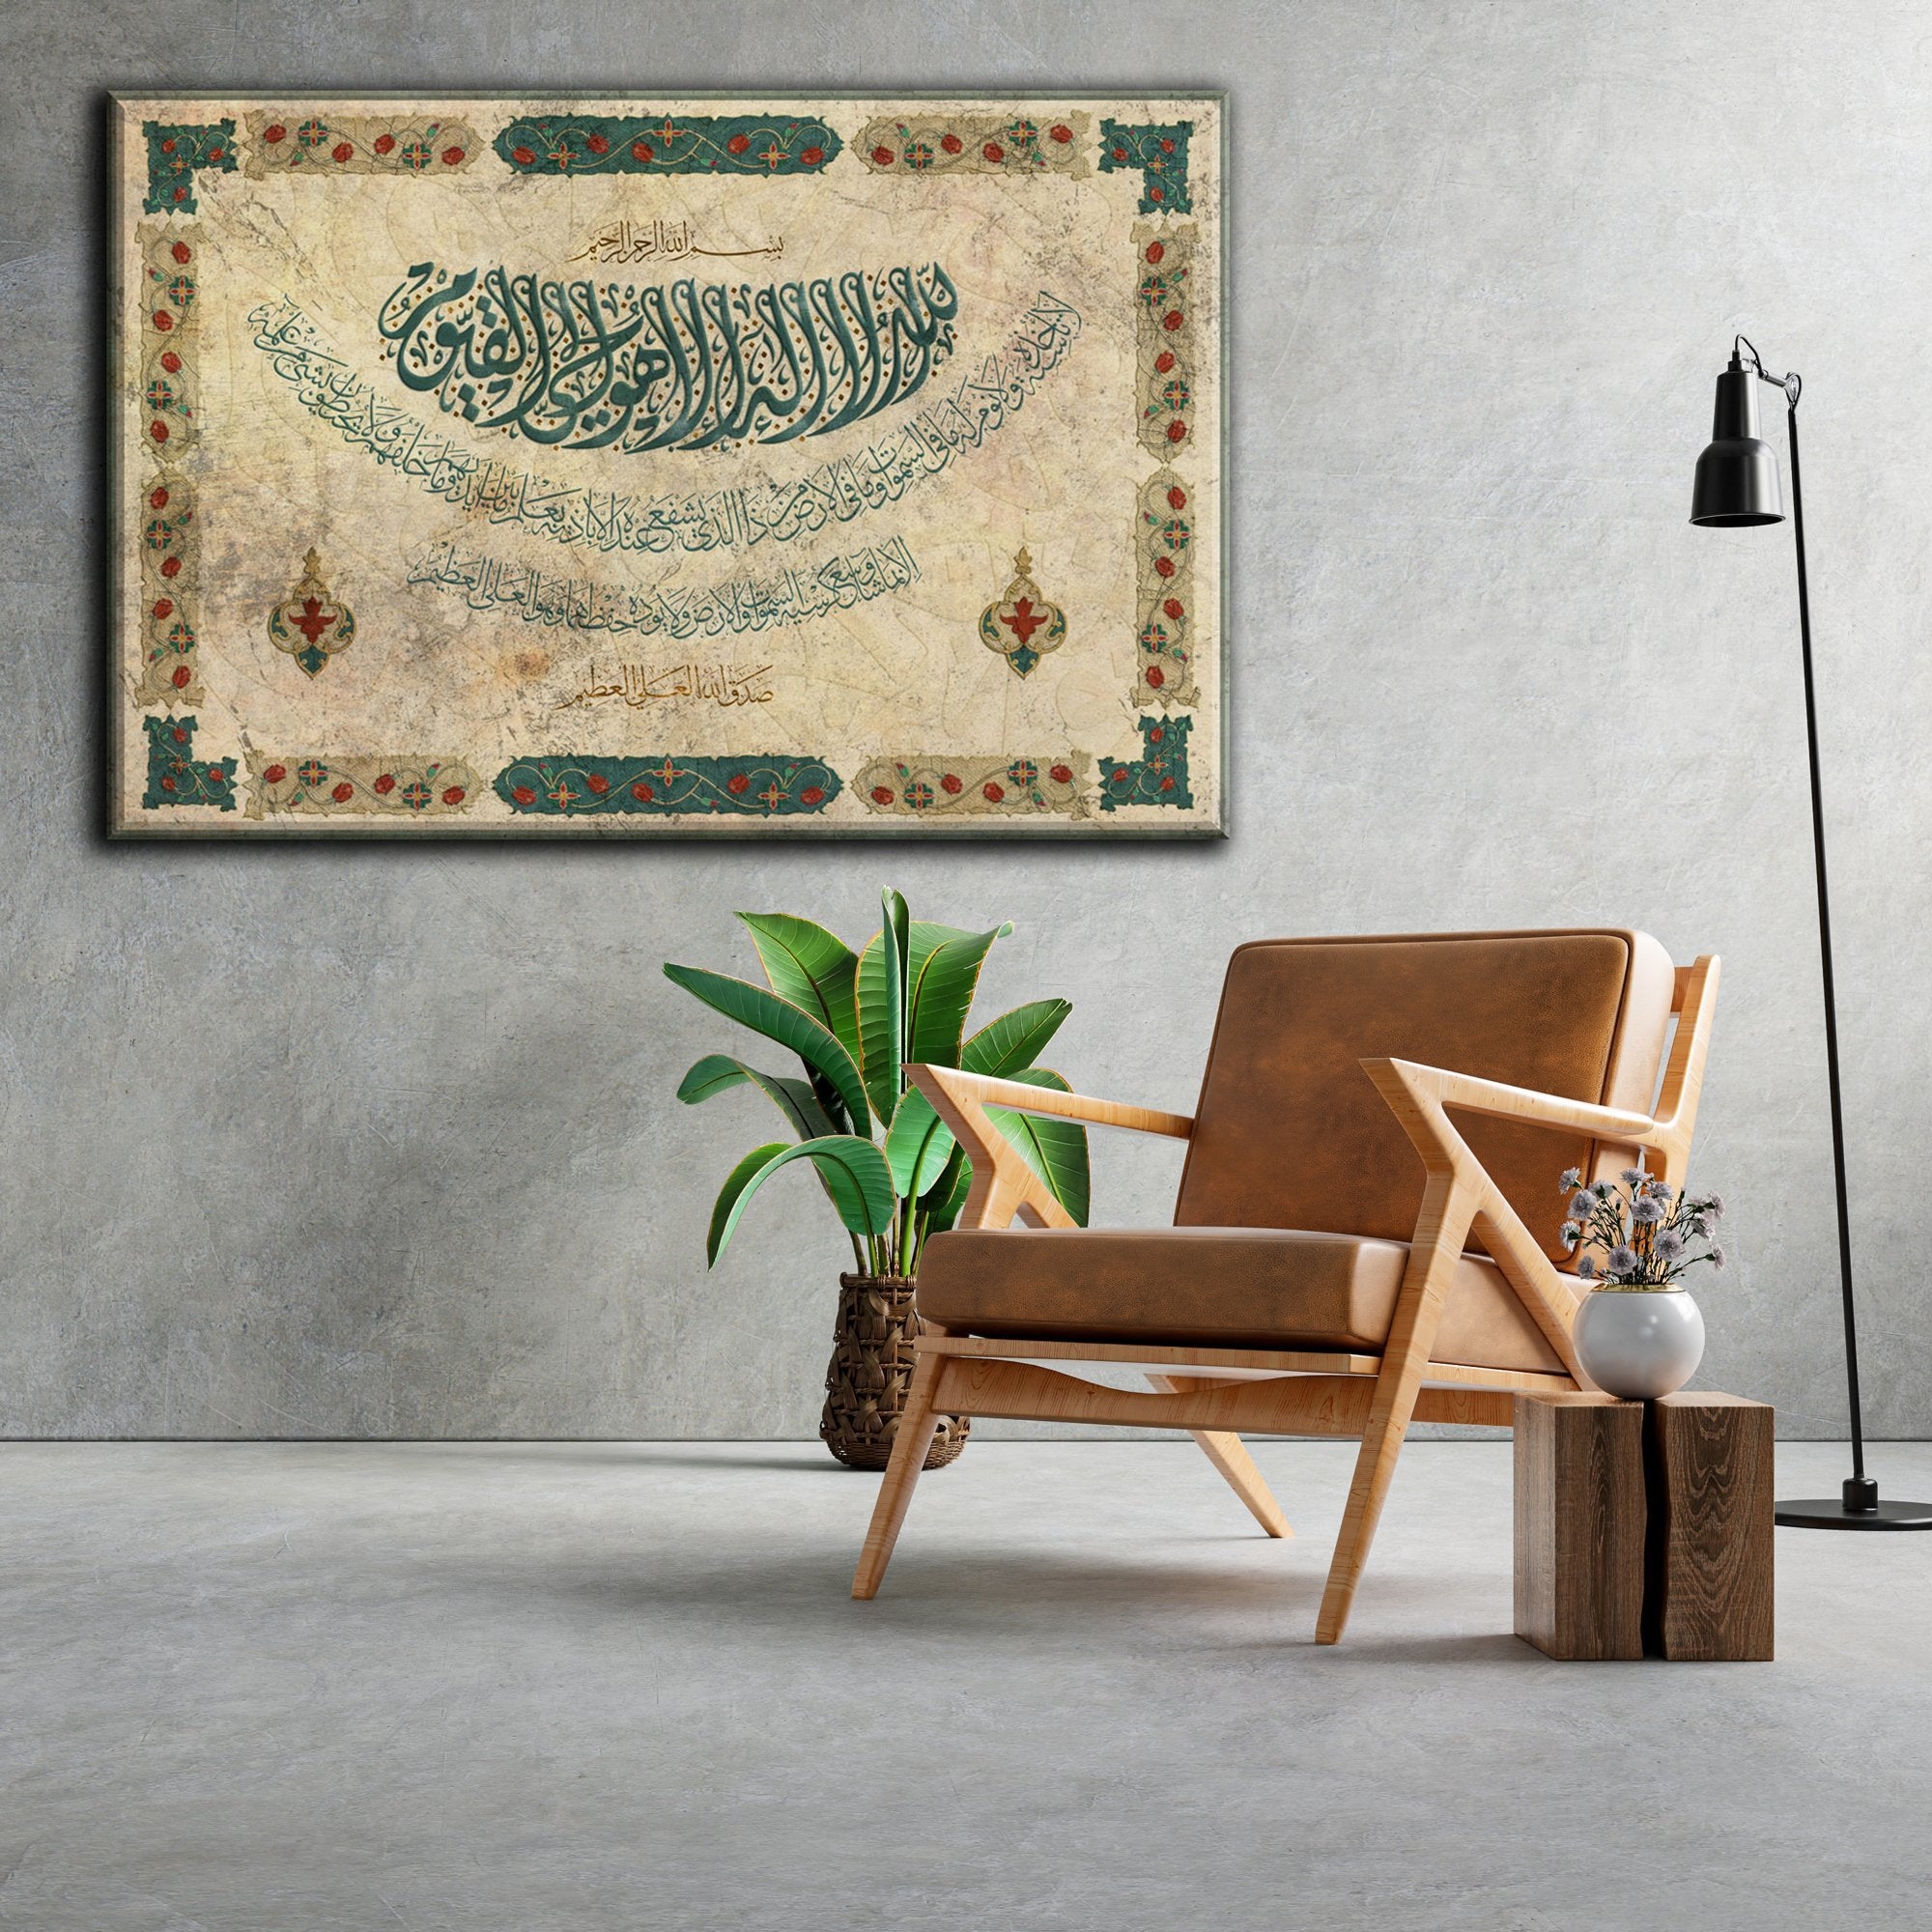 AYATUL KURSI - Verse of the Throne - Traditional Islamic Décor - Islamic Wall Art - Diwani Jeli - Giclée Fine Art Print - Arab Canvas